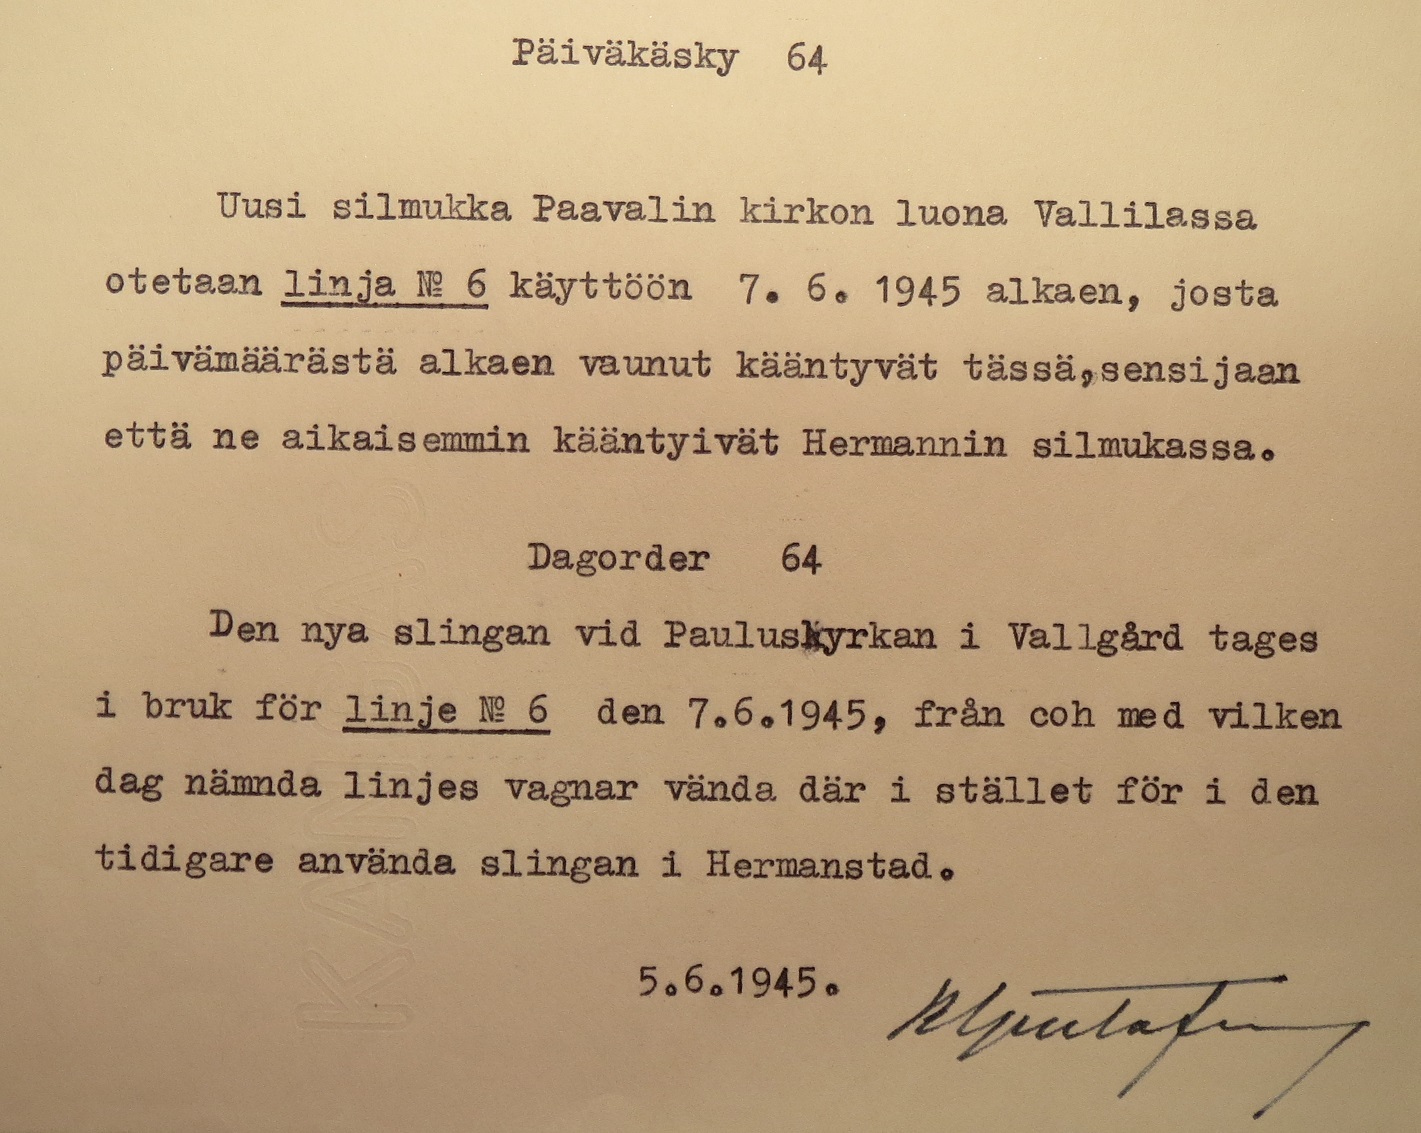 HKL:n päiväkäsky 64/1945